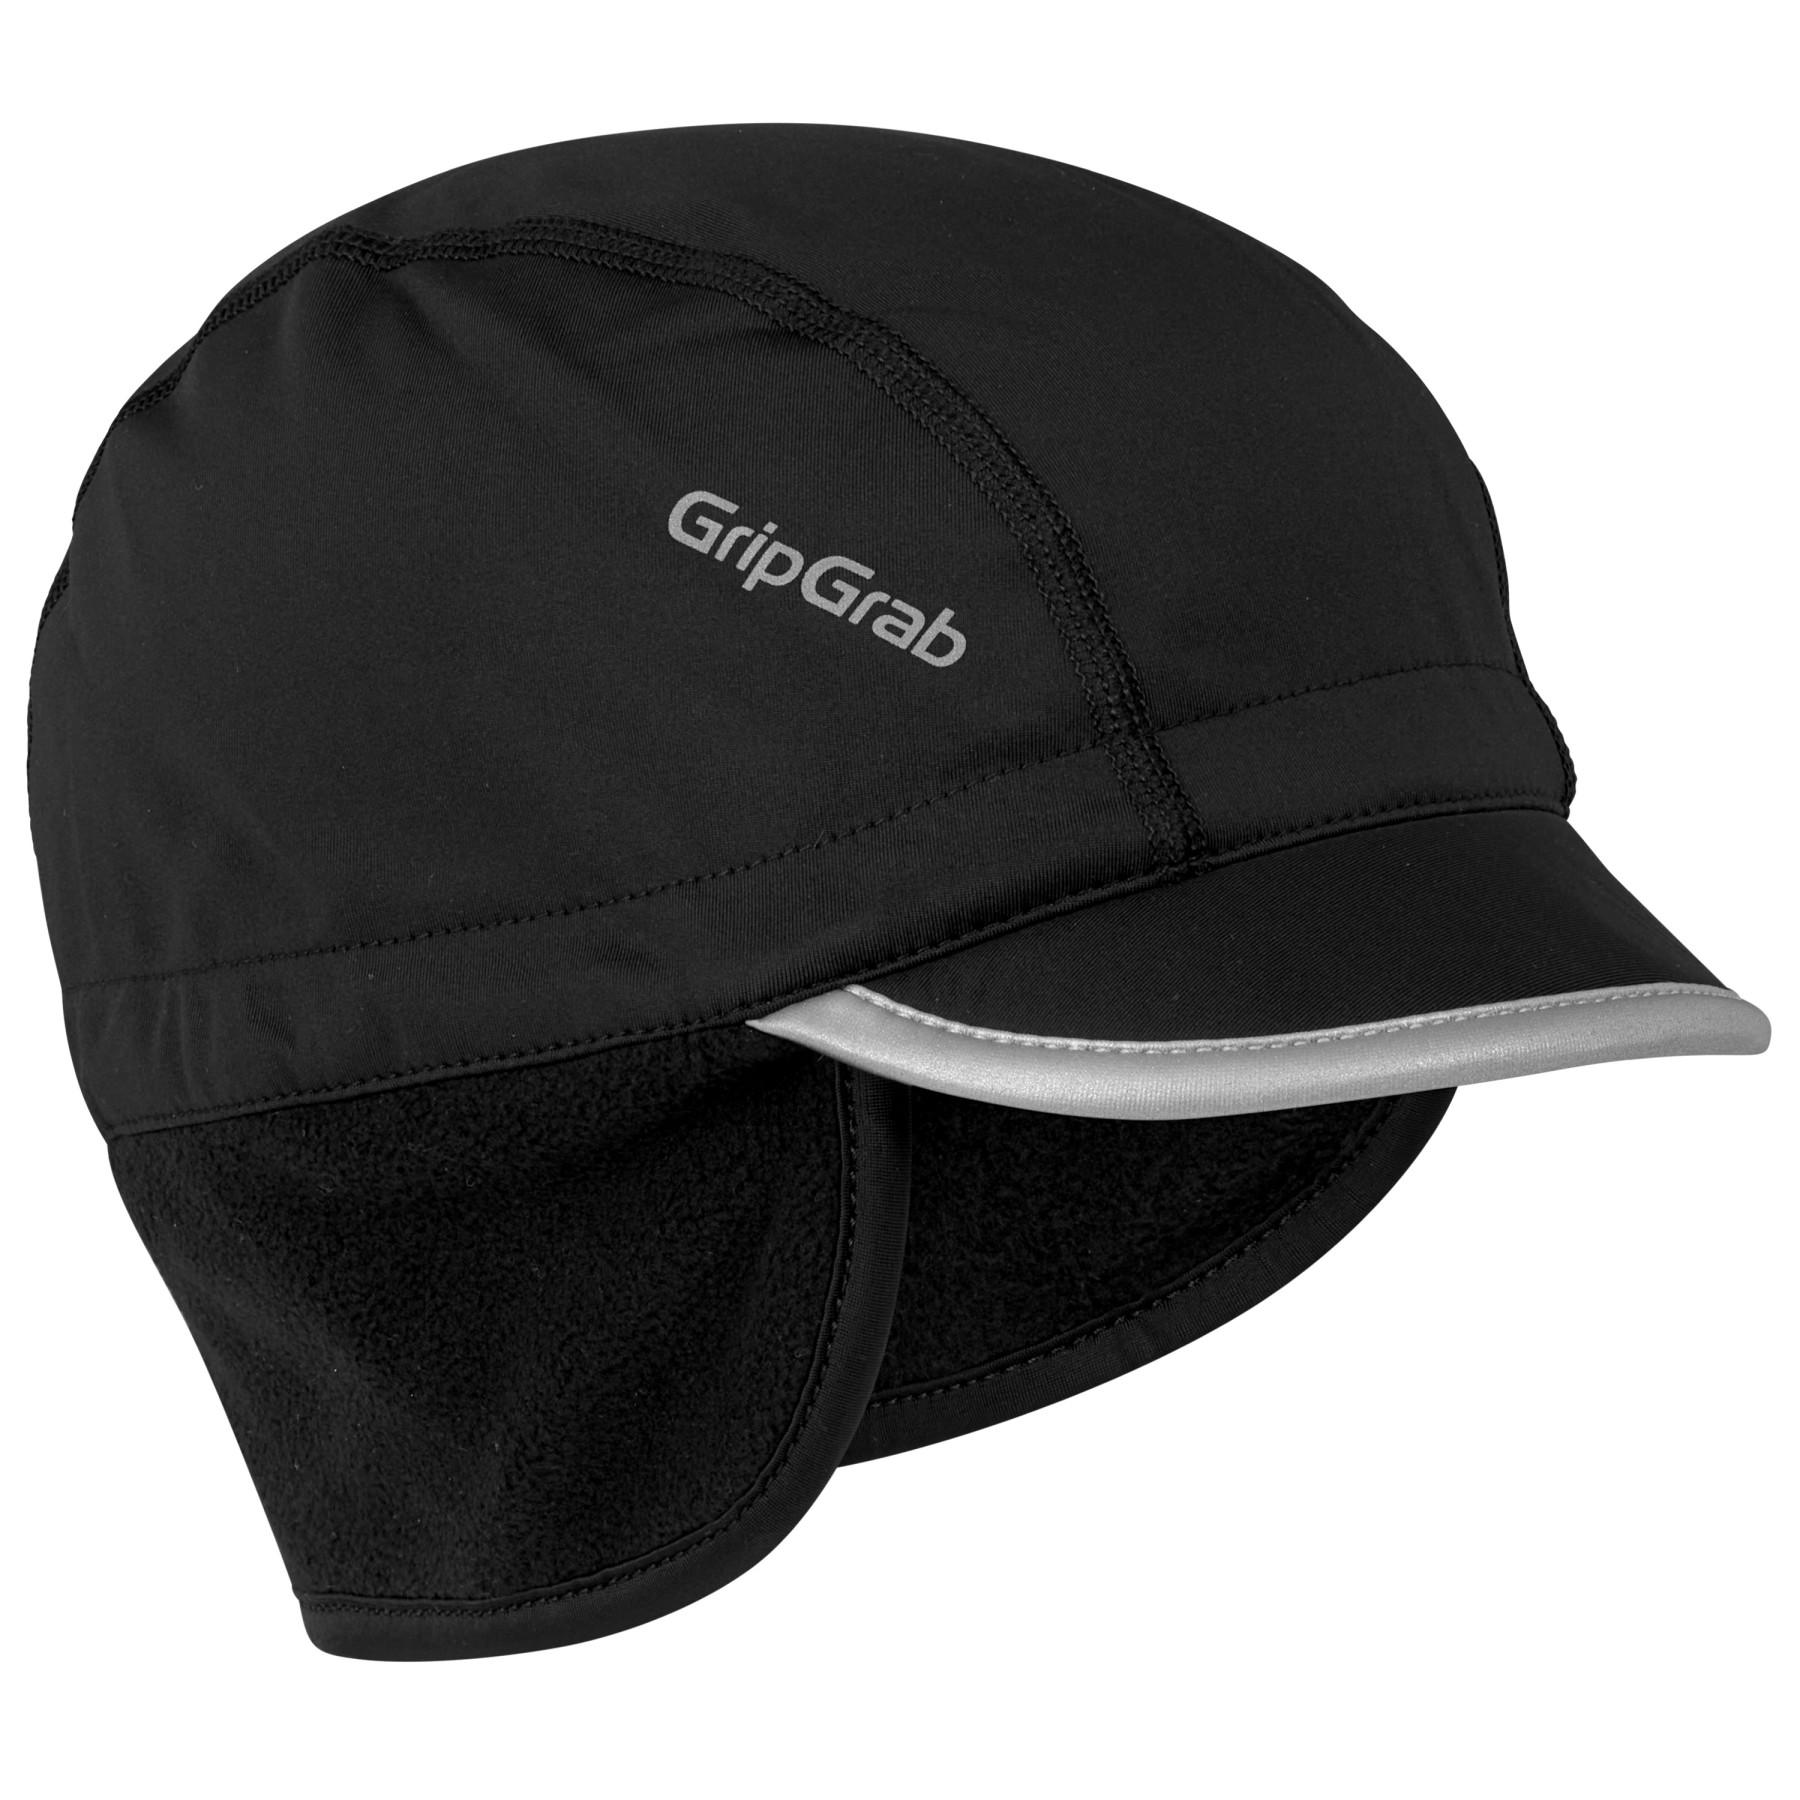 Gripgrab Windproof Winter Cycling Cap  Black